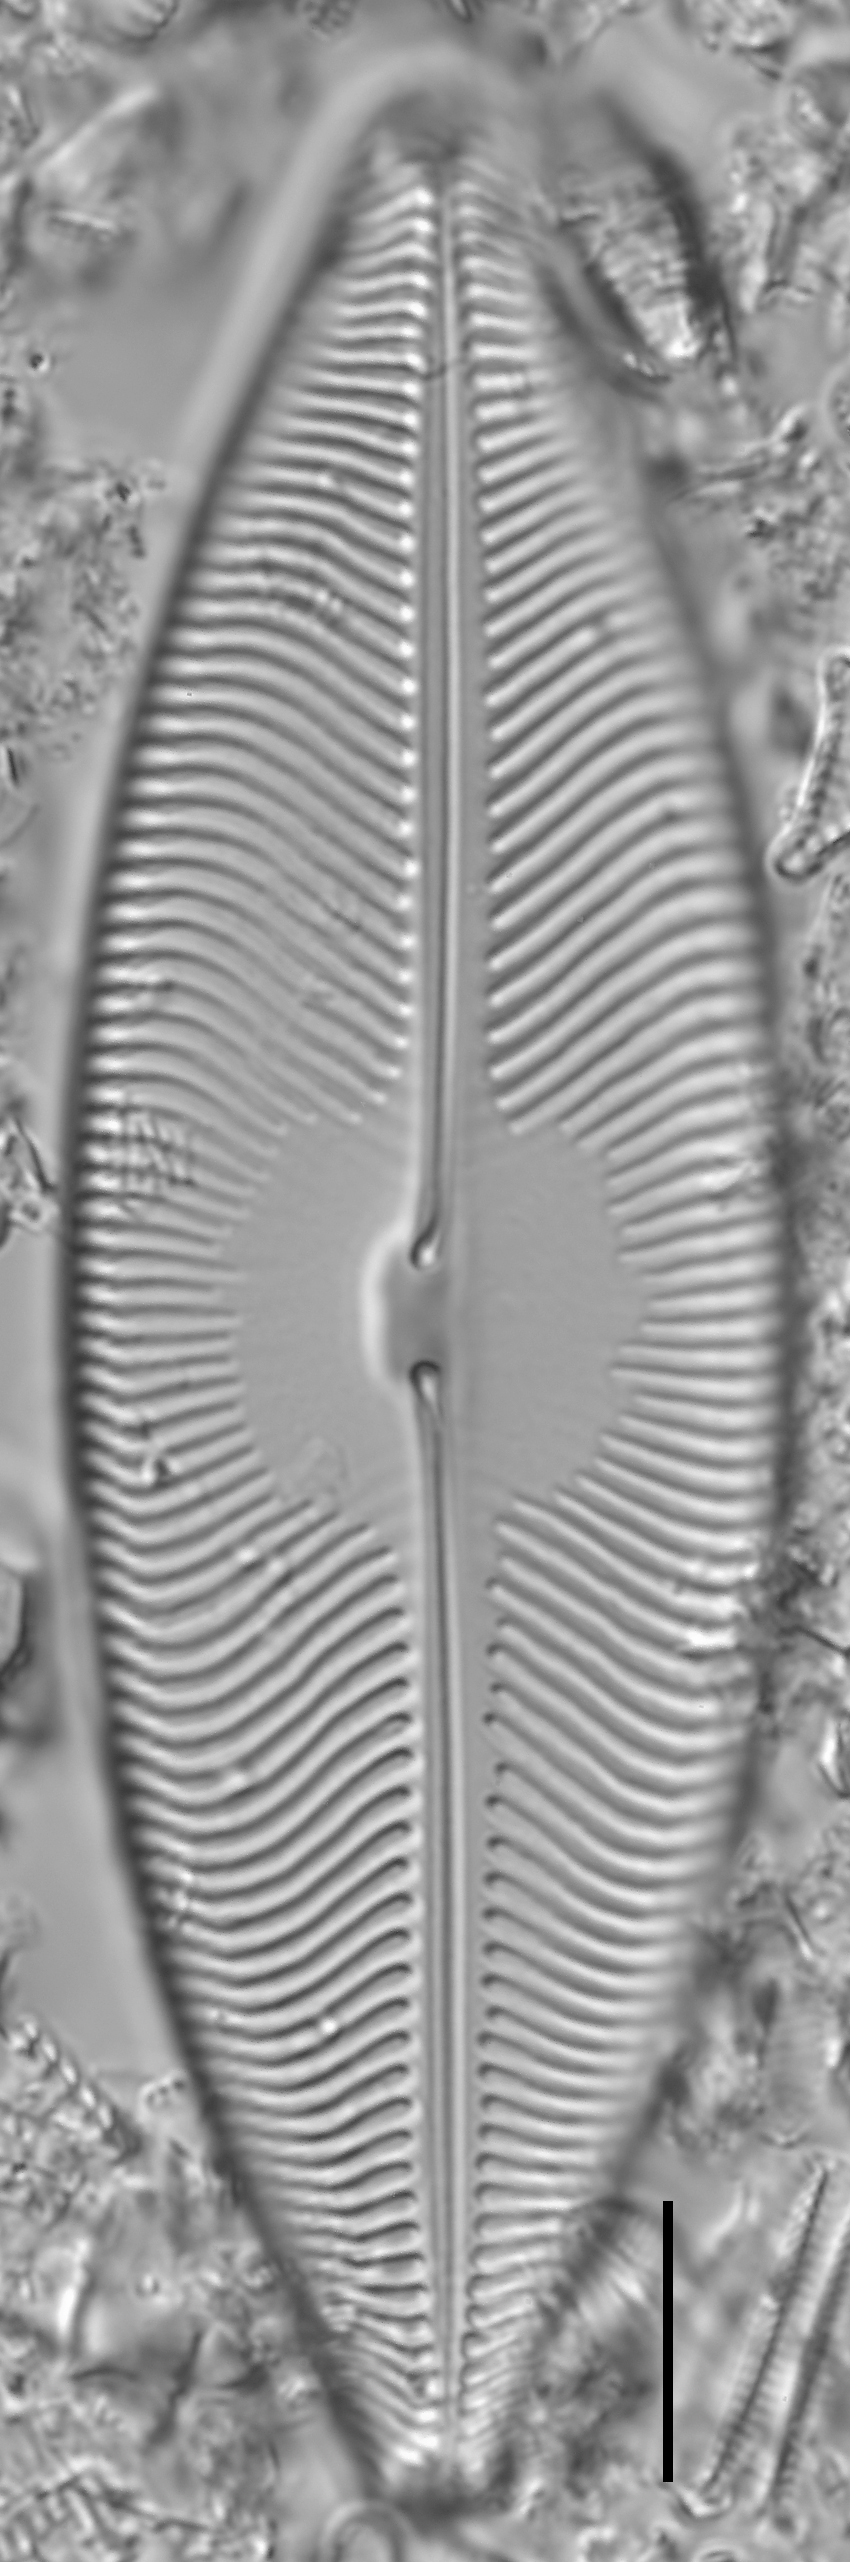 Pinnunavis elegans LM1